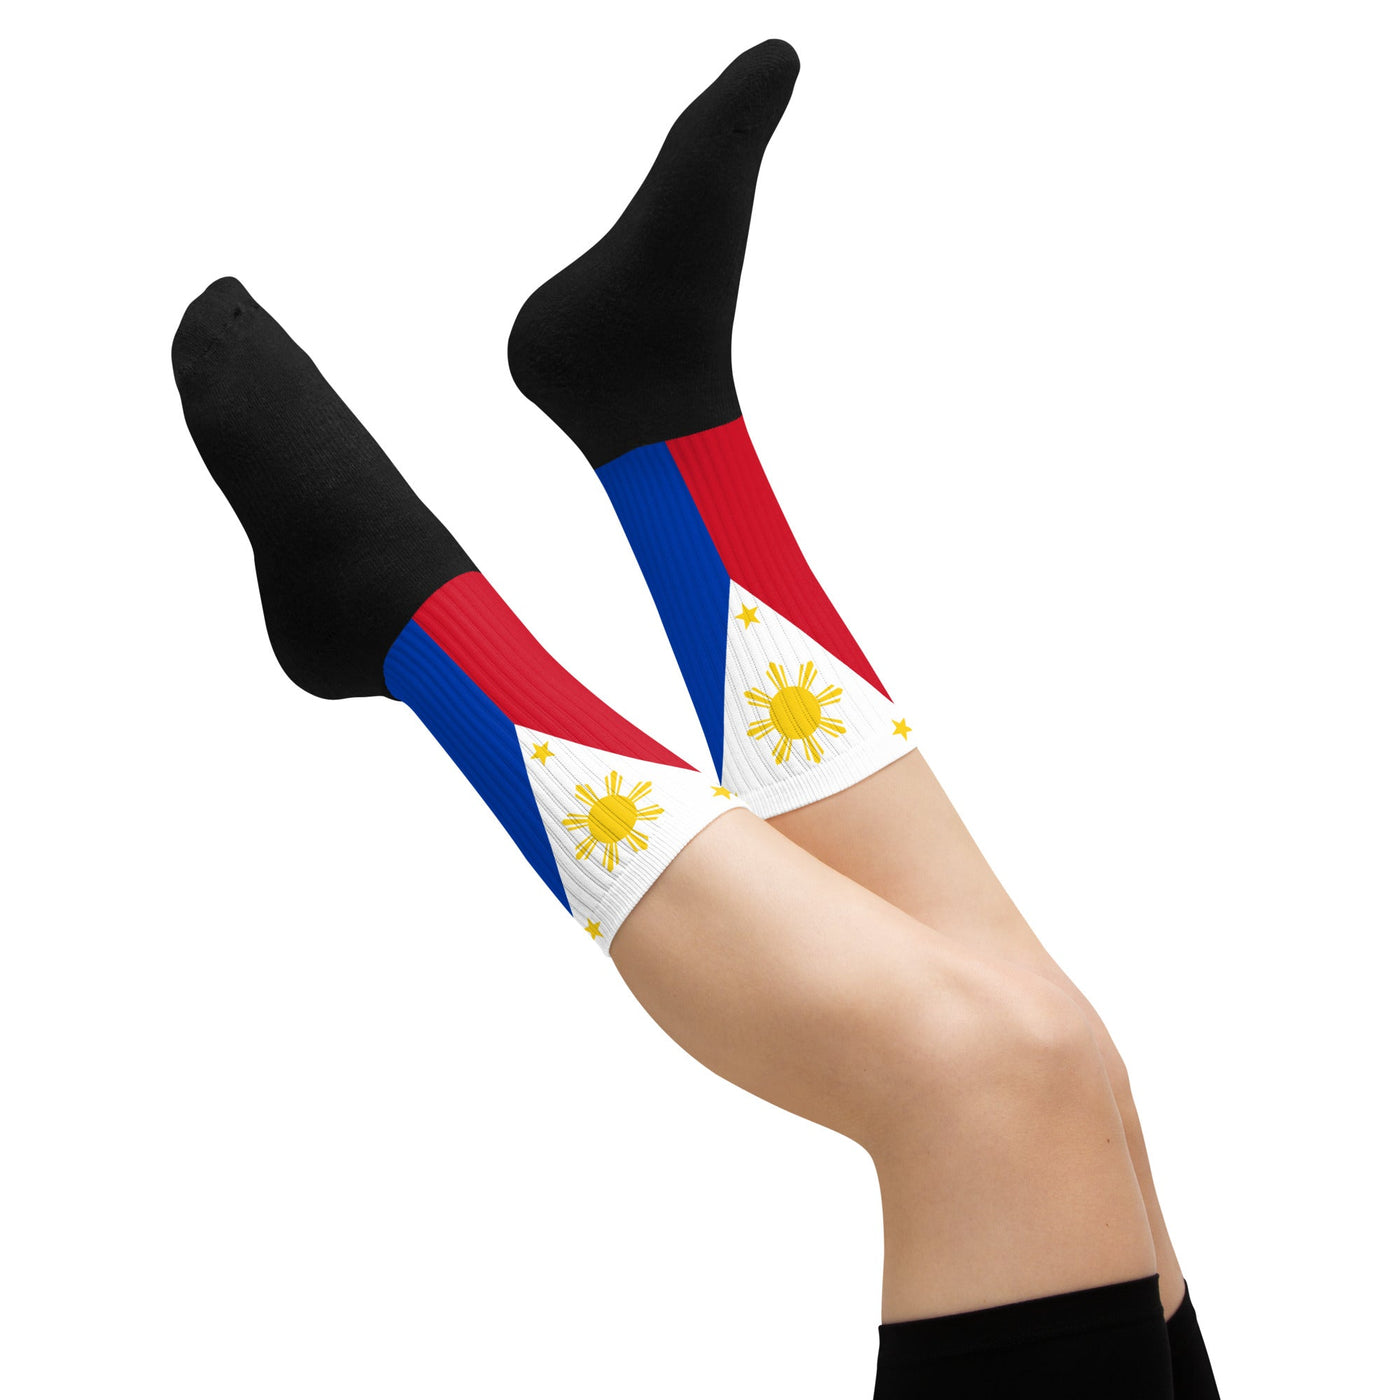 Philippines Socks - Ezra's Clothing